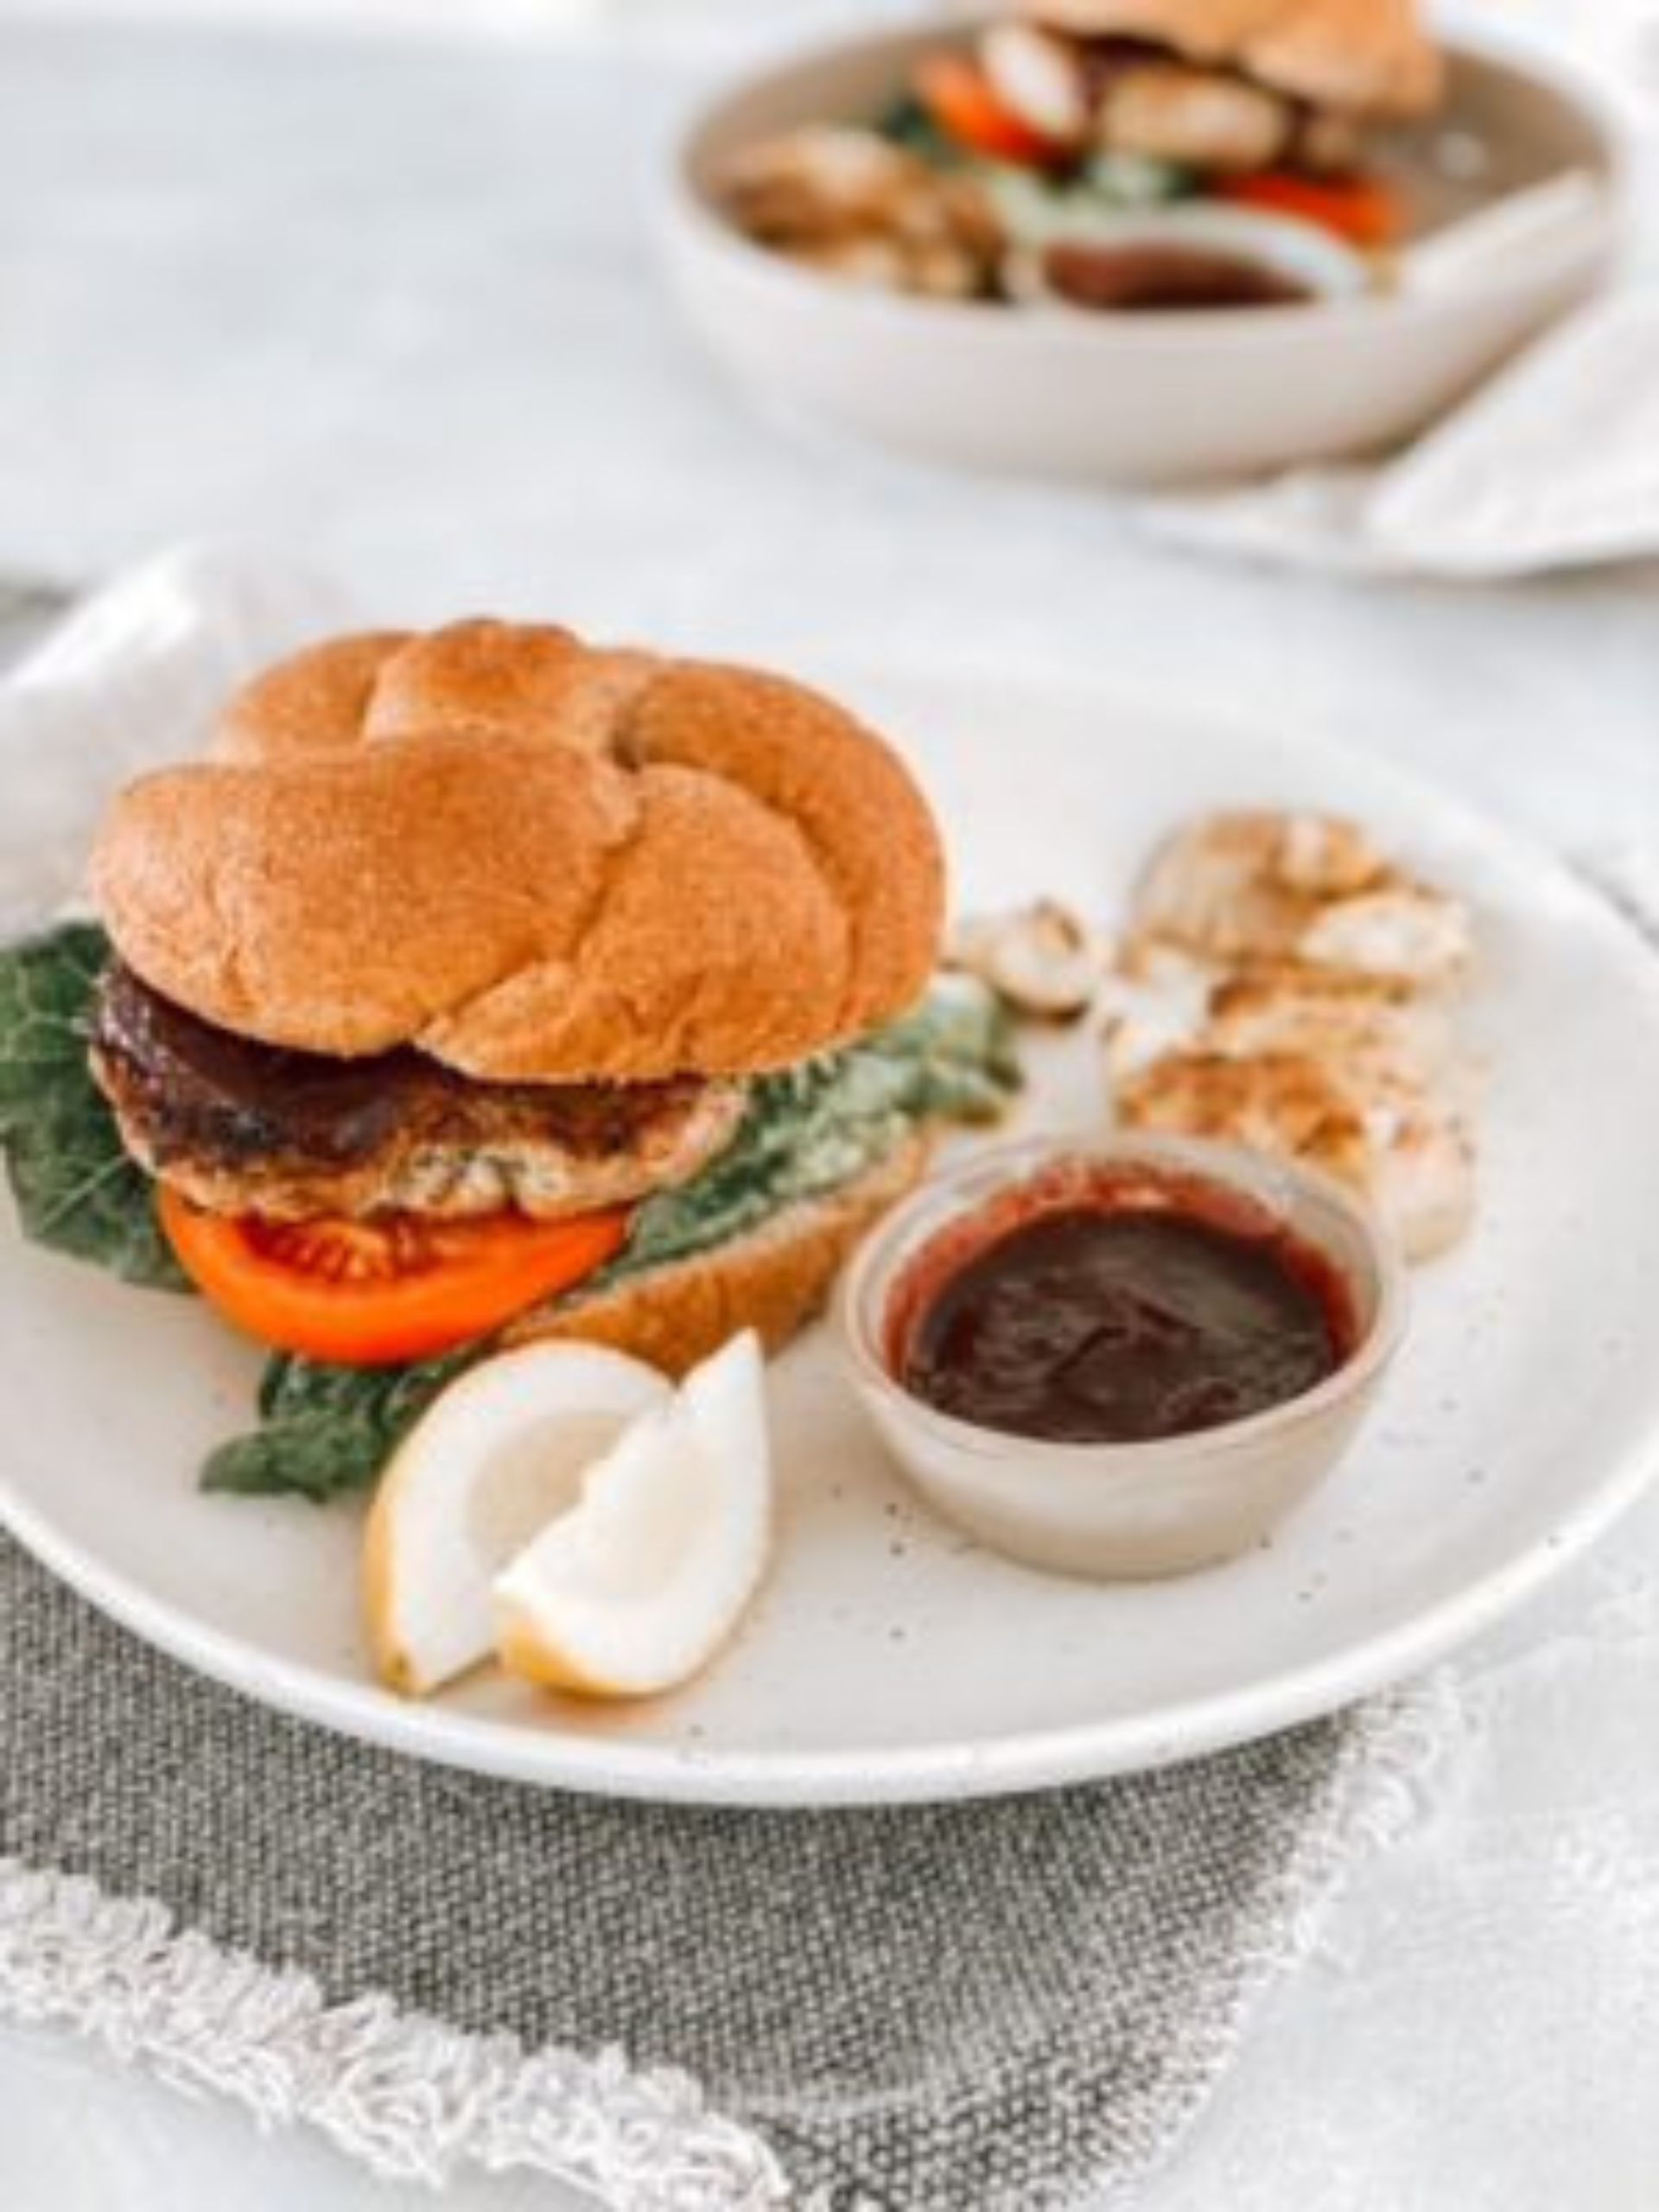 Gluten Free Turkey Burger Recipe with Zucchini